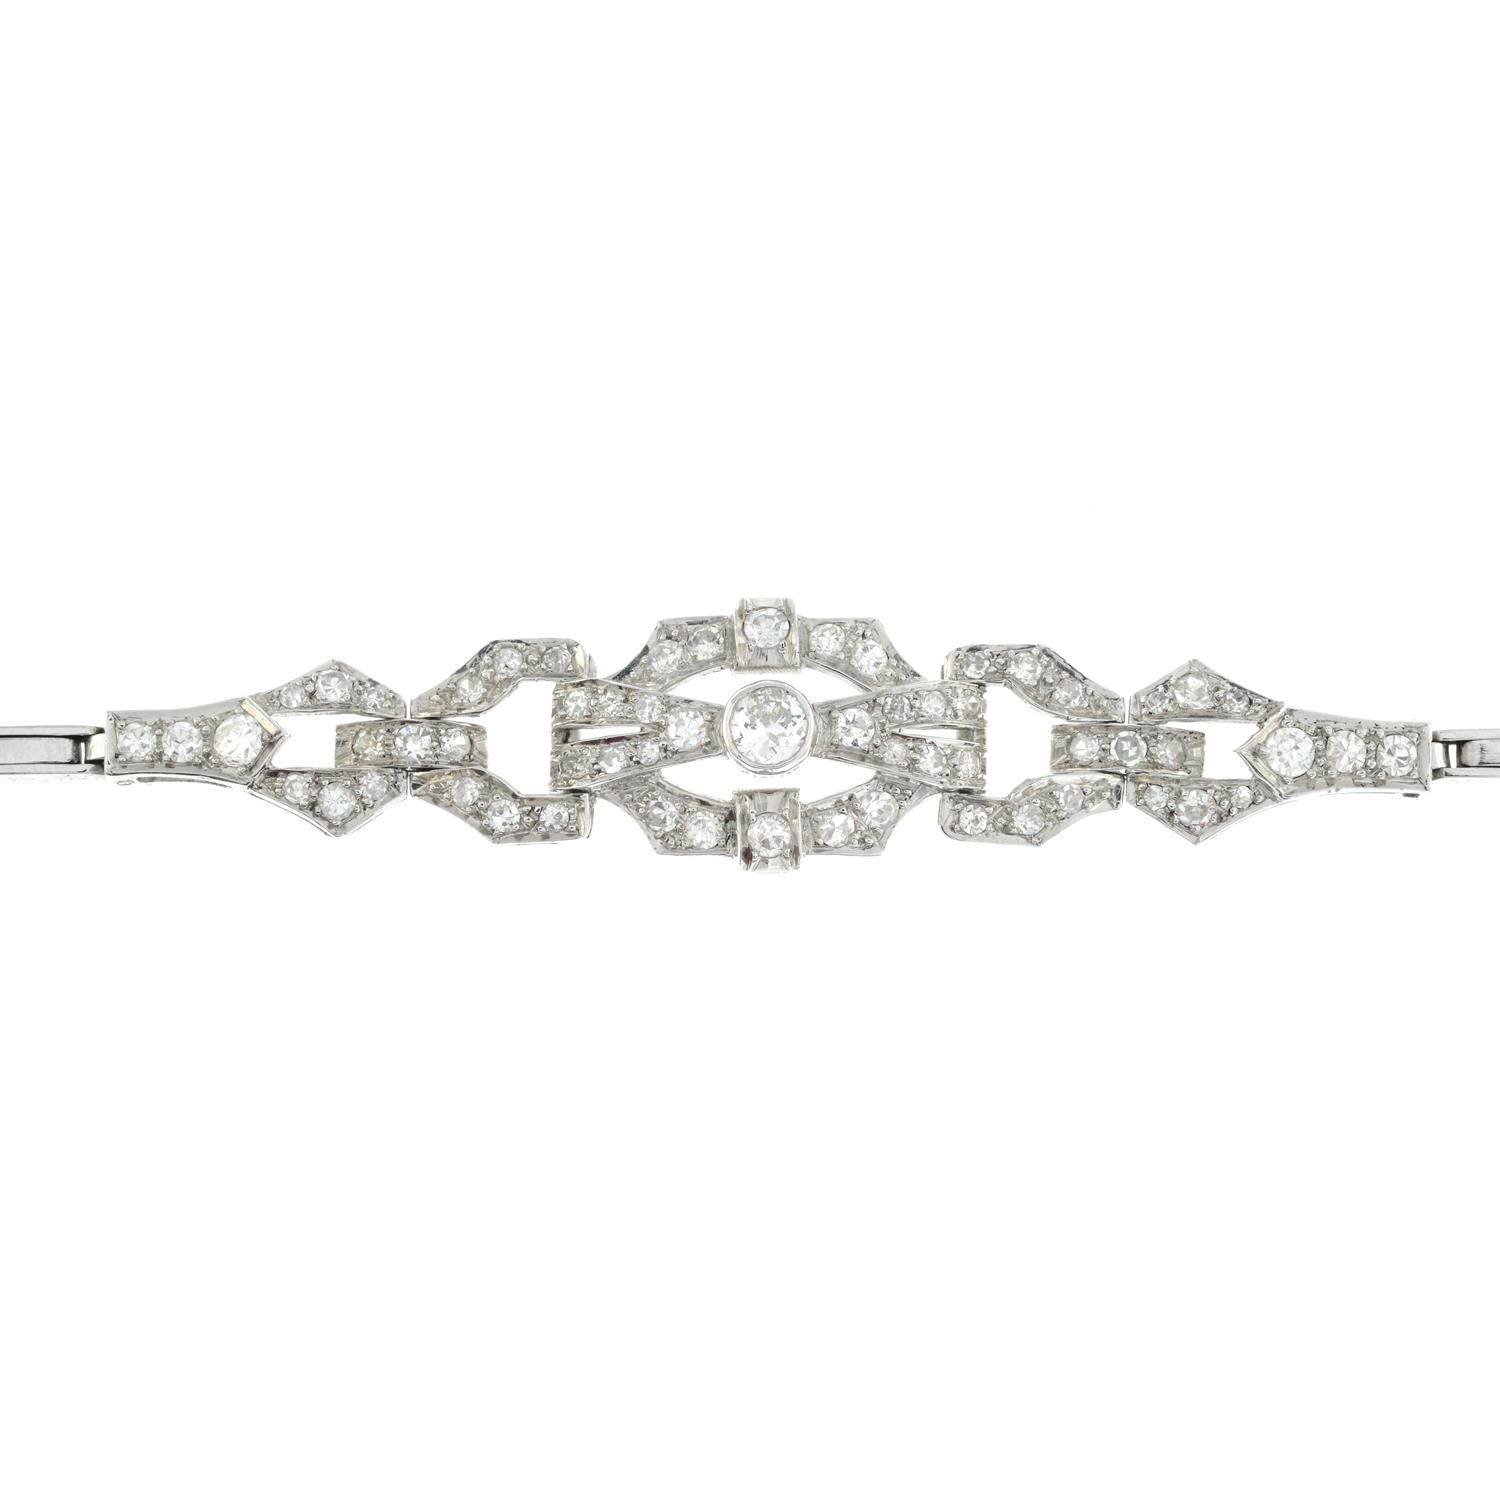 Diamond bracelet - Image 3 of 4